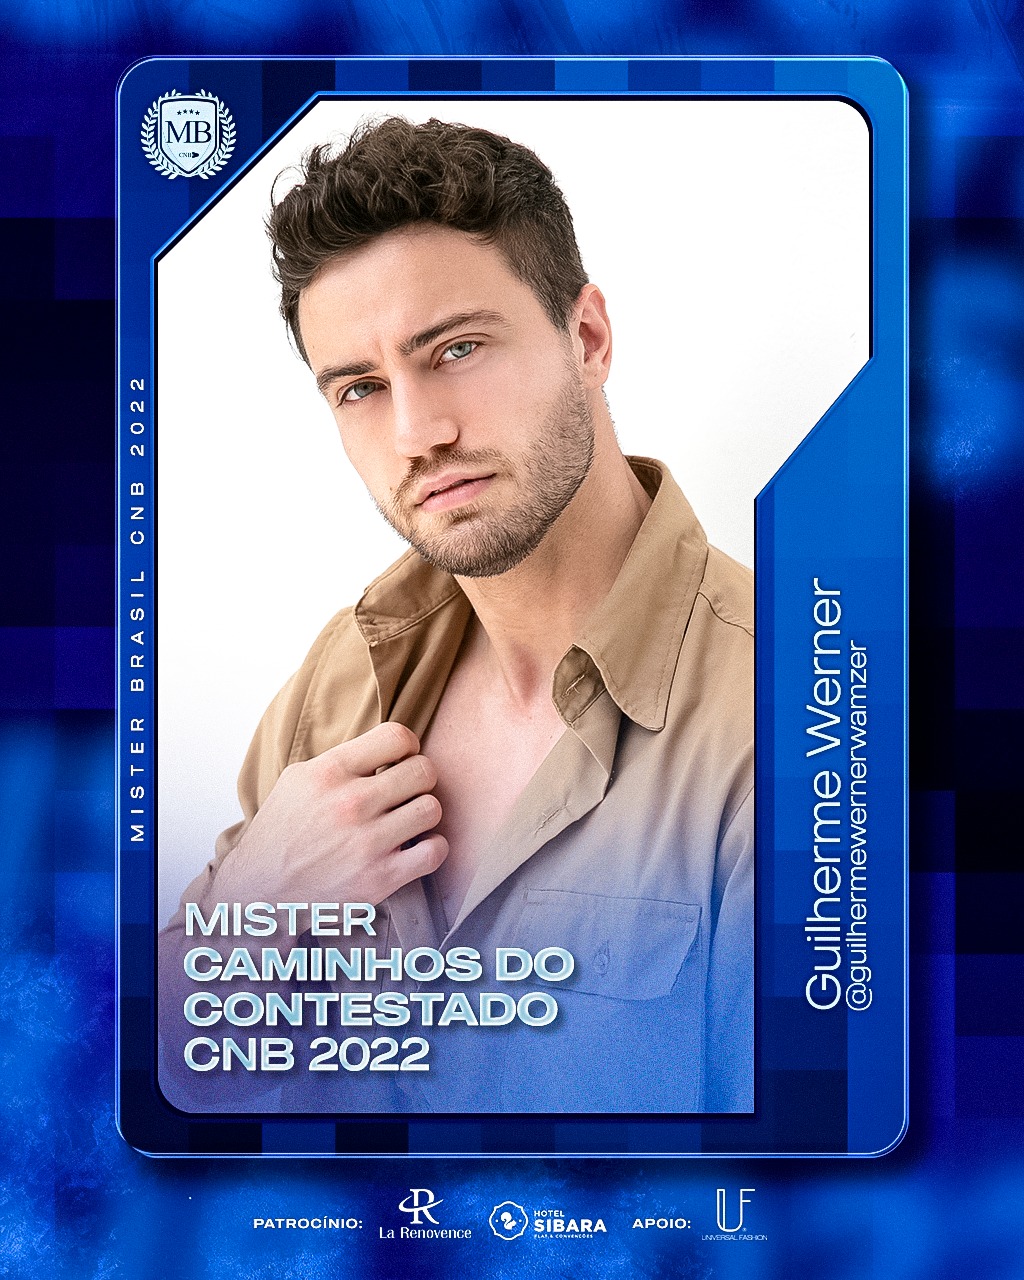 Mister Brasil CNB 2022 is Mister Caminhos do Contestado - Page 2 27903111